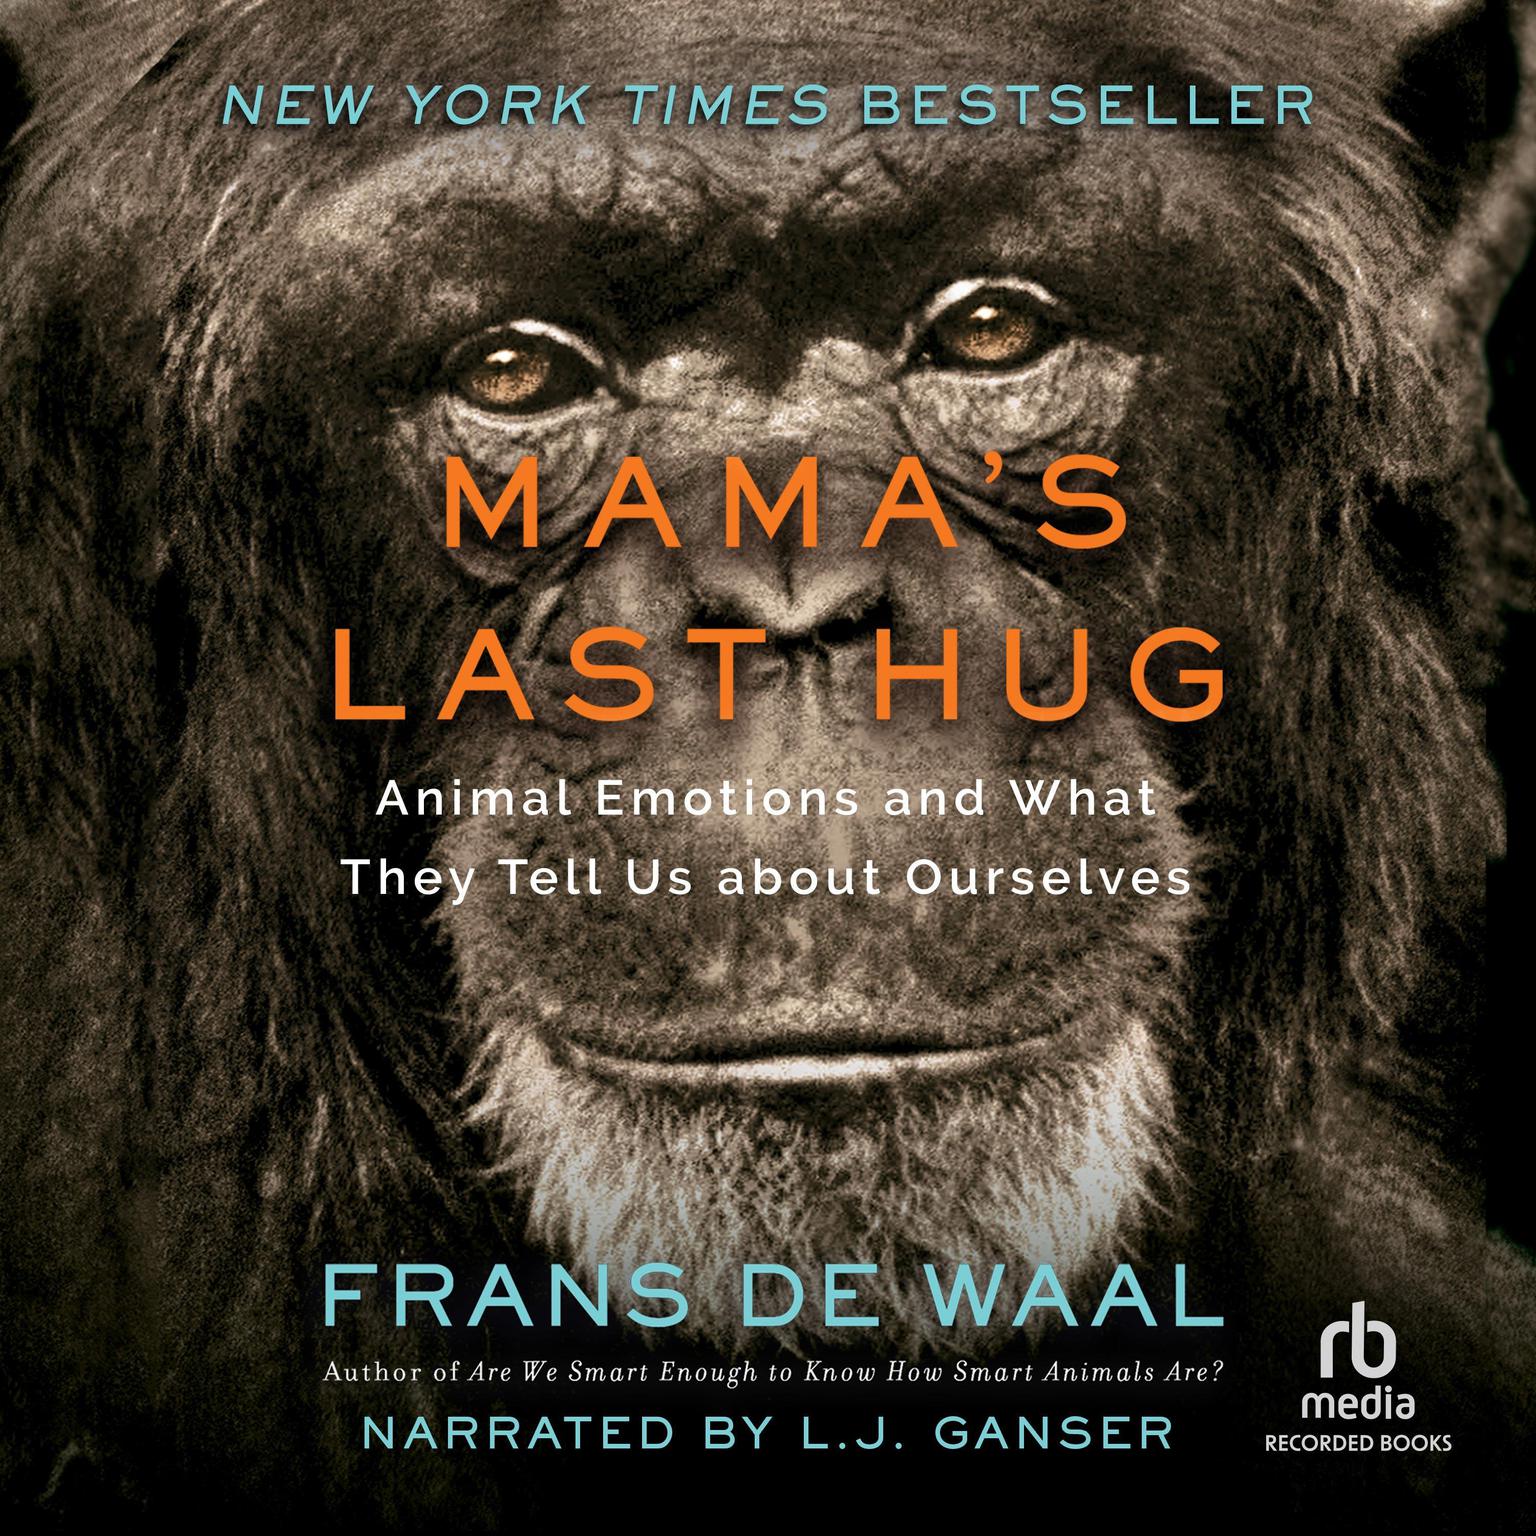 Mamas Last Hug: Animal and Human Emotion Audiobook, by Frans de Waal